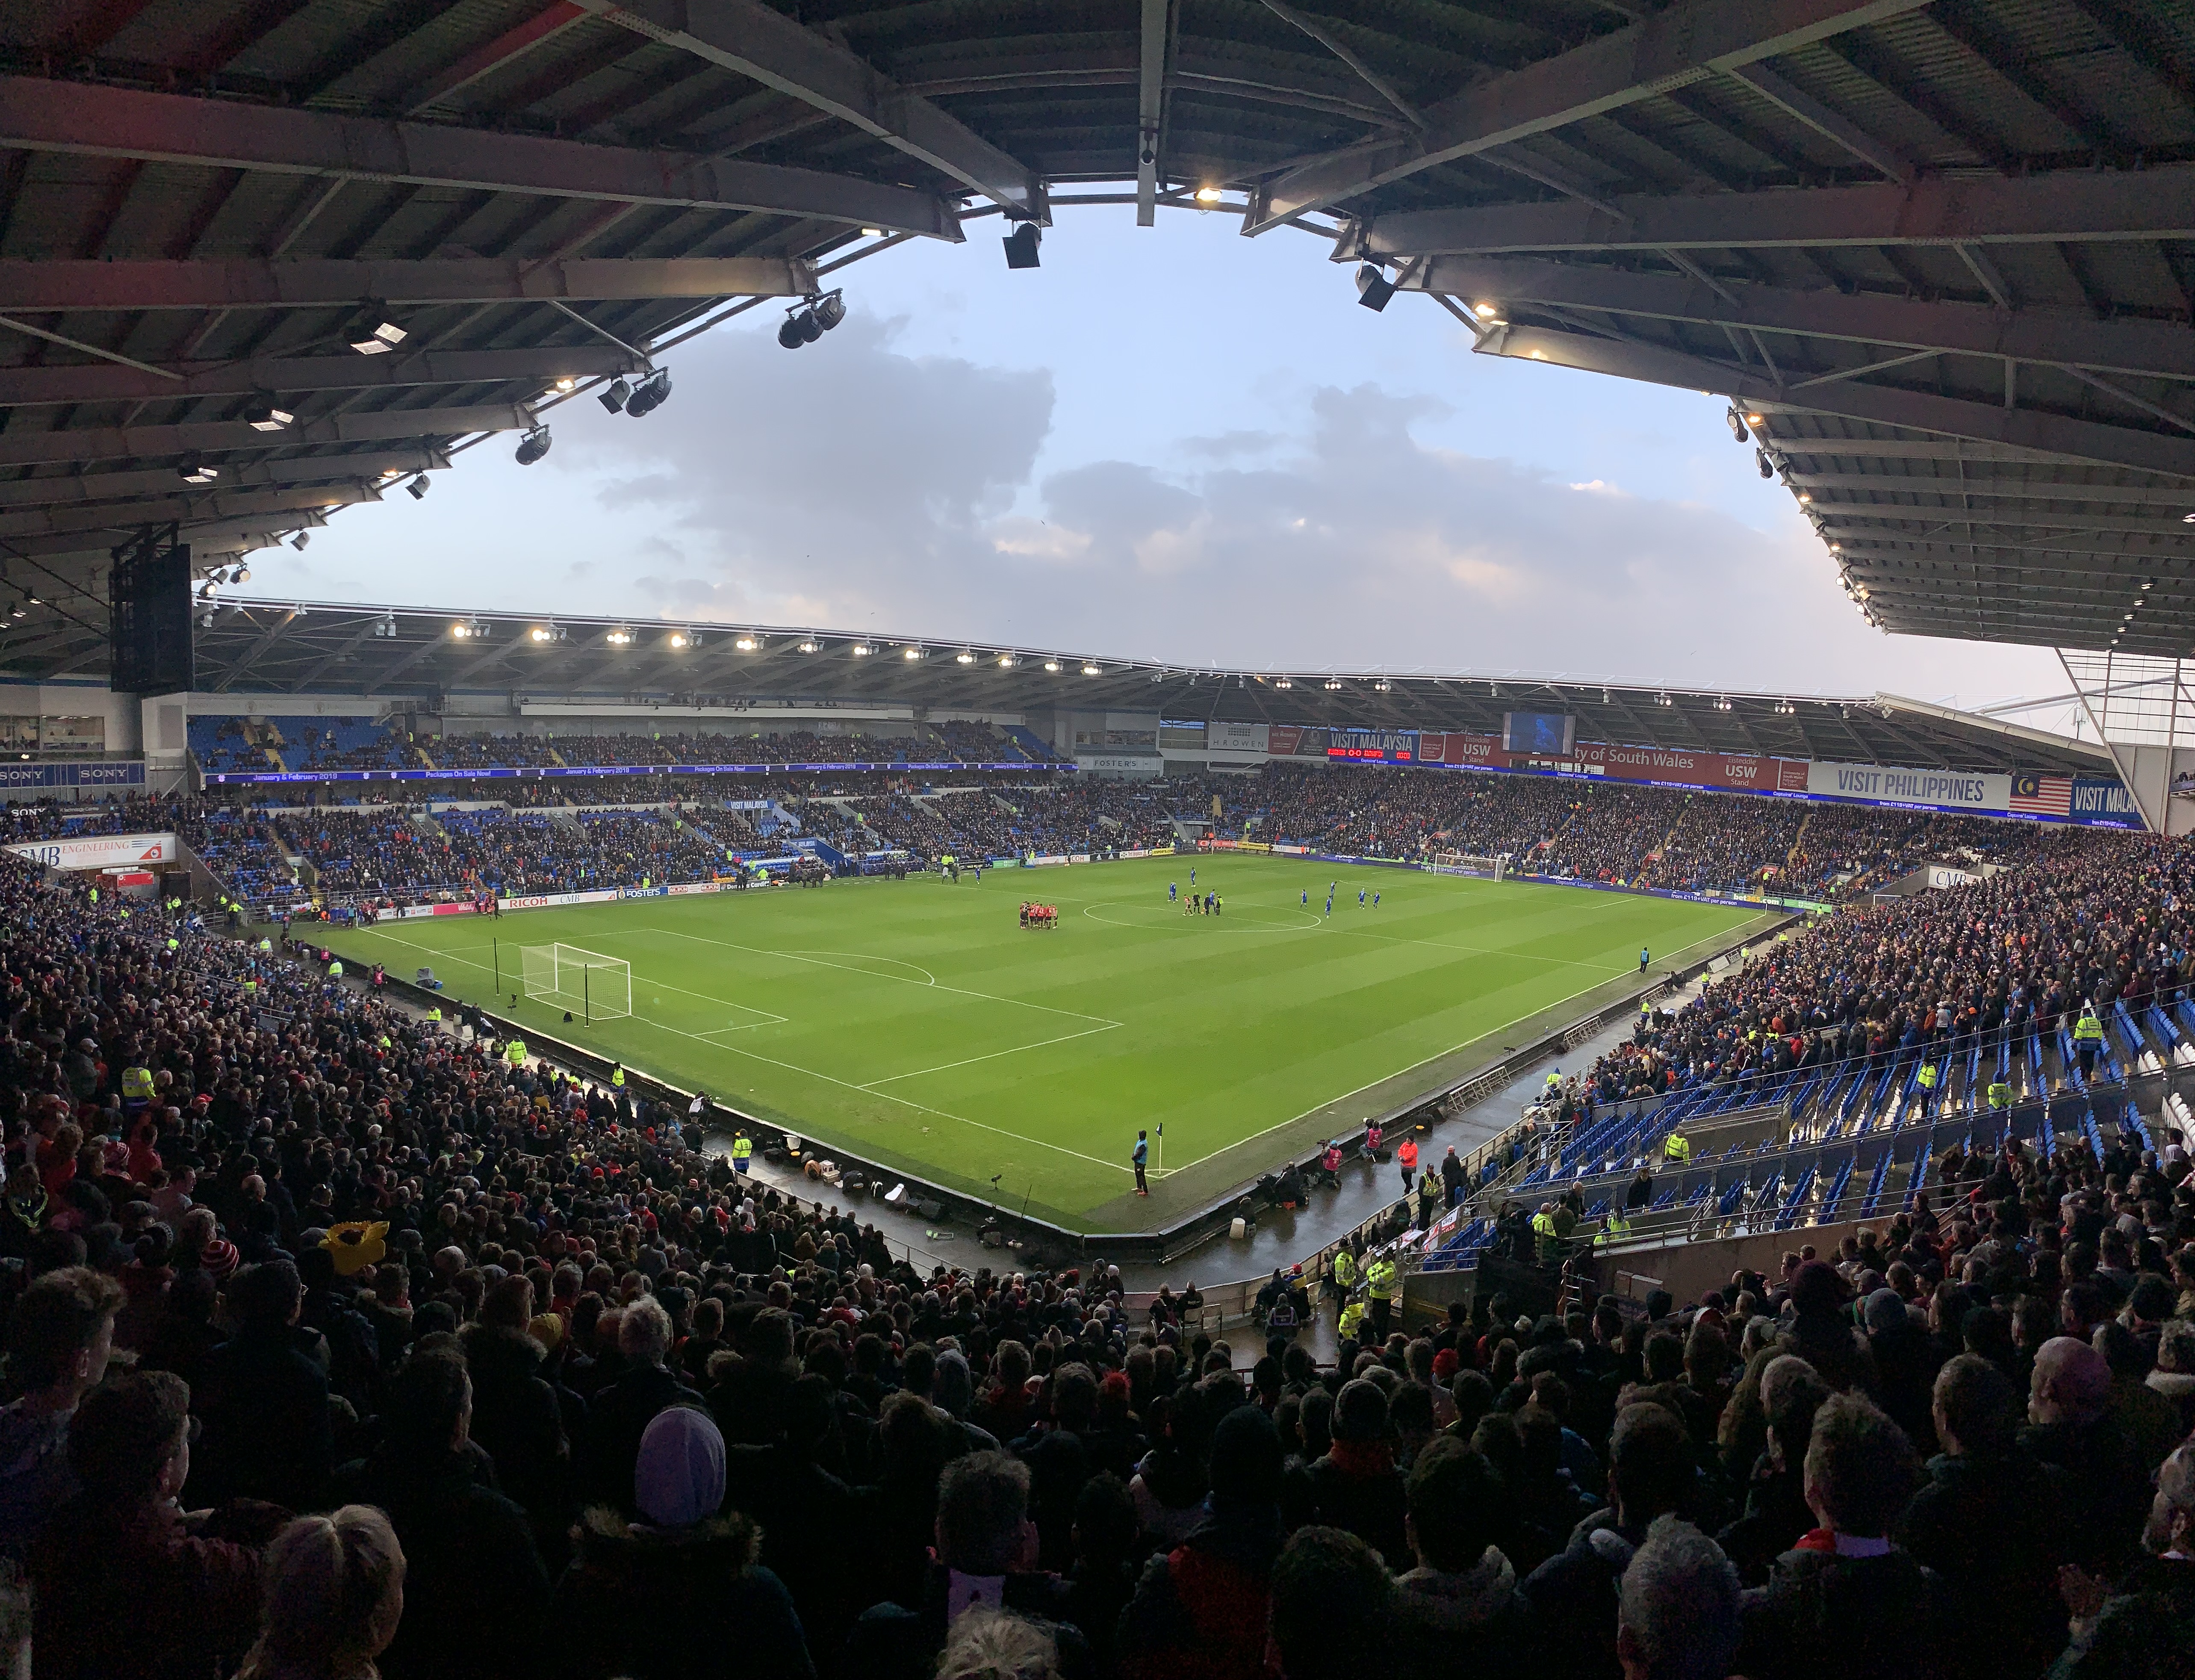 File:Cardiff City Stadium 44878307354 834a44fd8c.jpg - Wikipedia